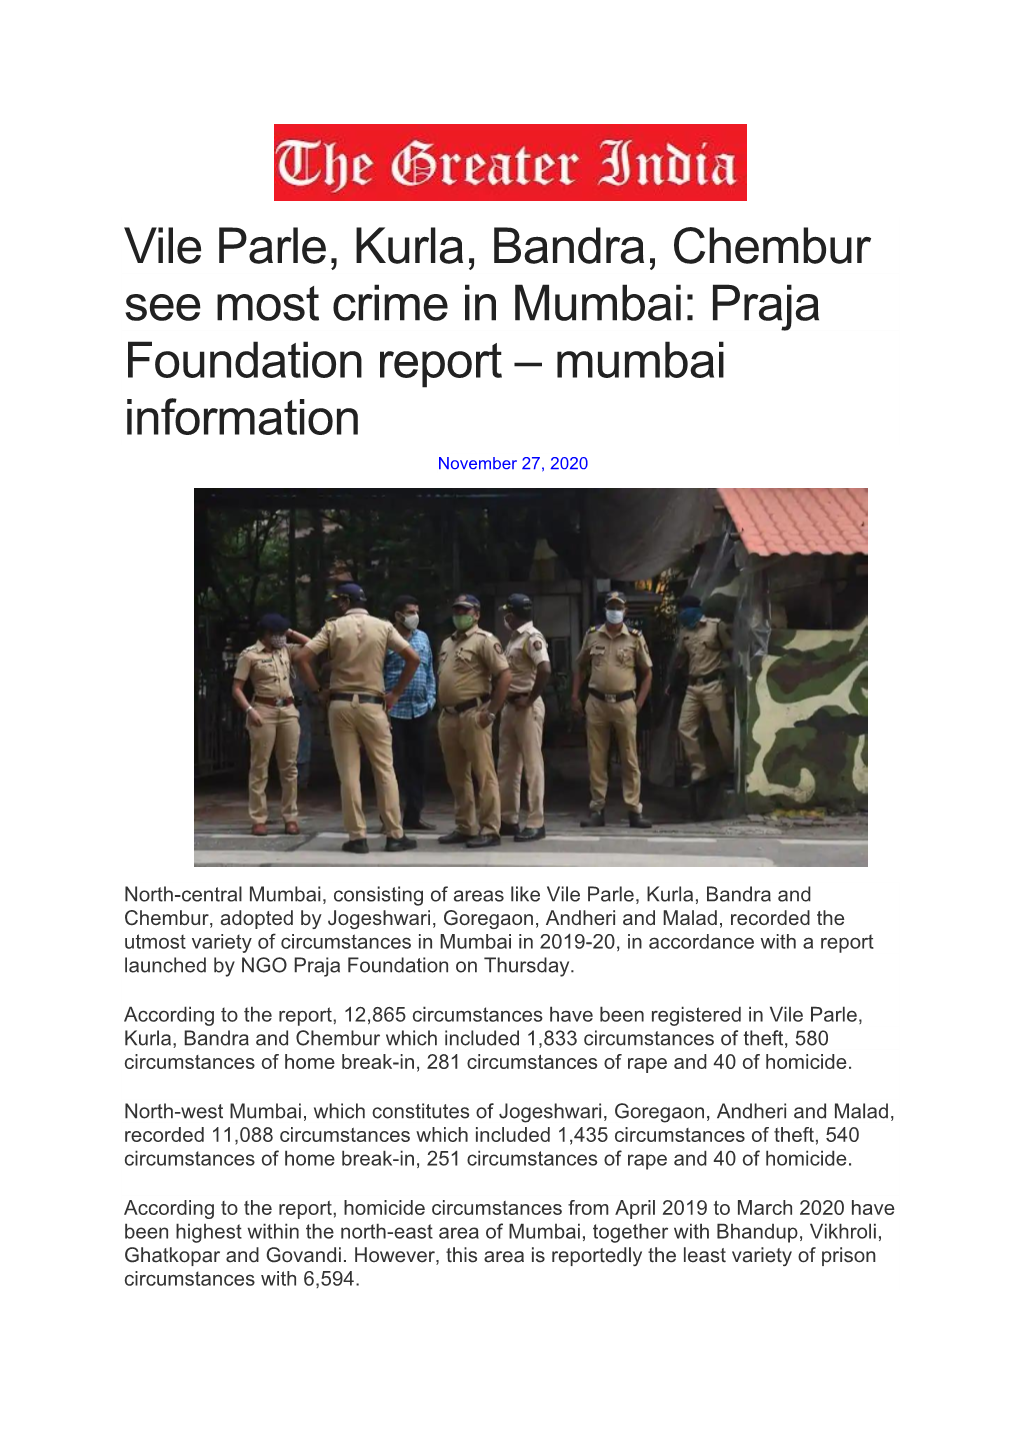 Vile Parle, Kurla, Bandra, Chembur See Most Crime in Mumbai: Praja Foundation Report – Mumbai Information November 27, 2020